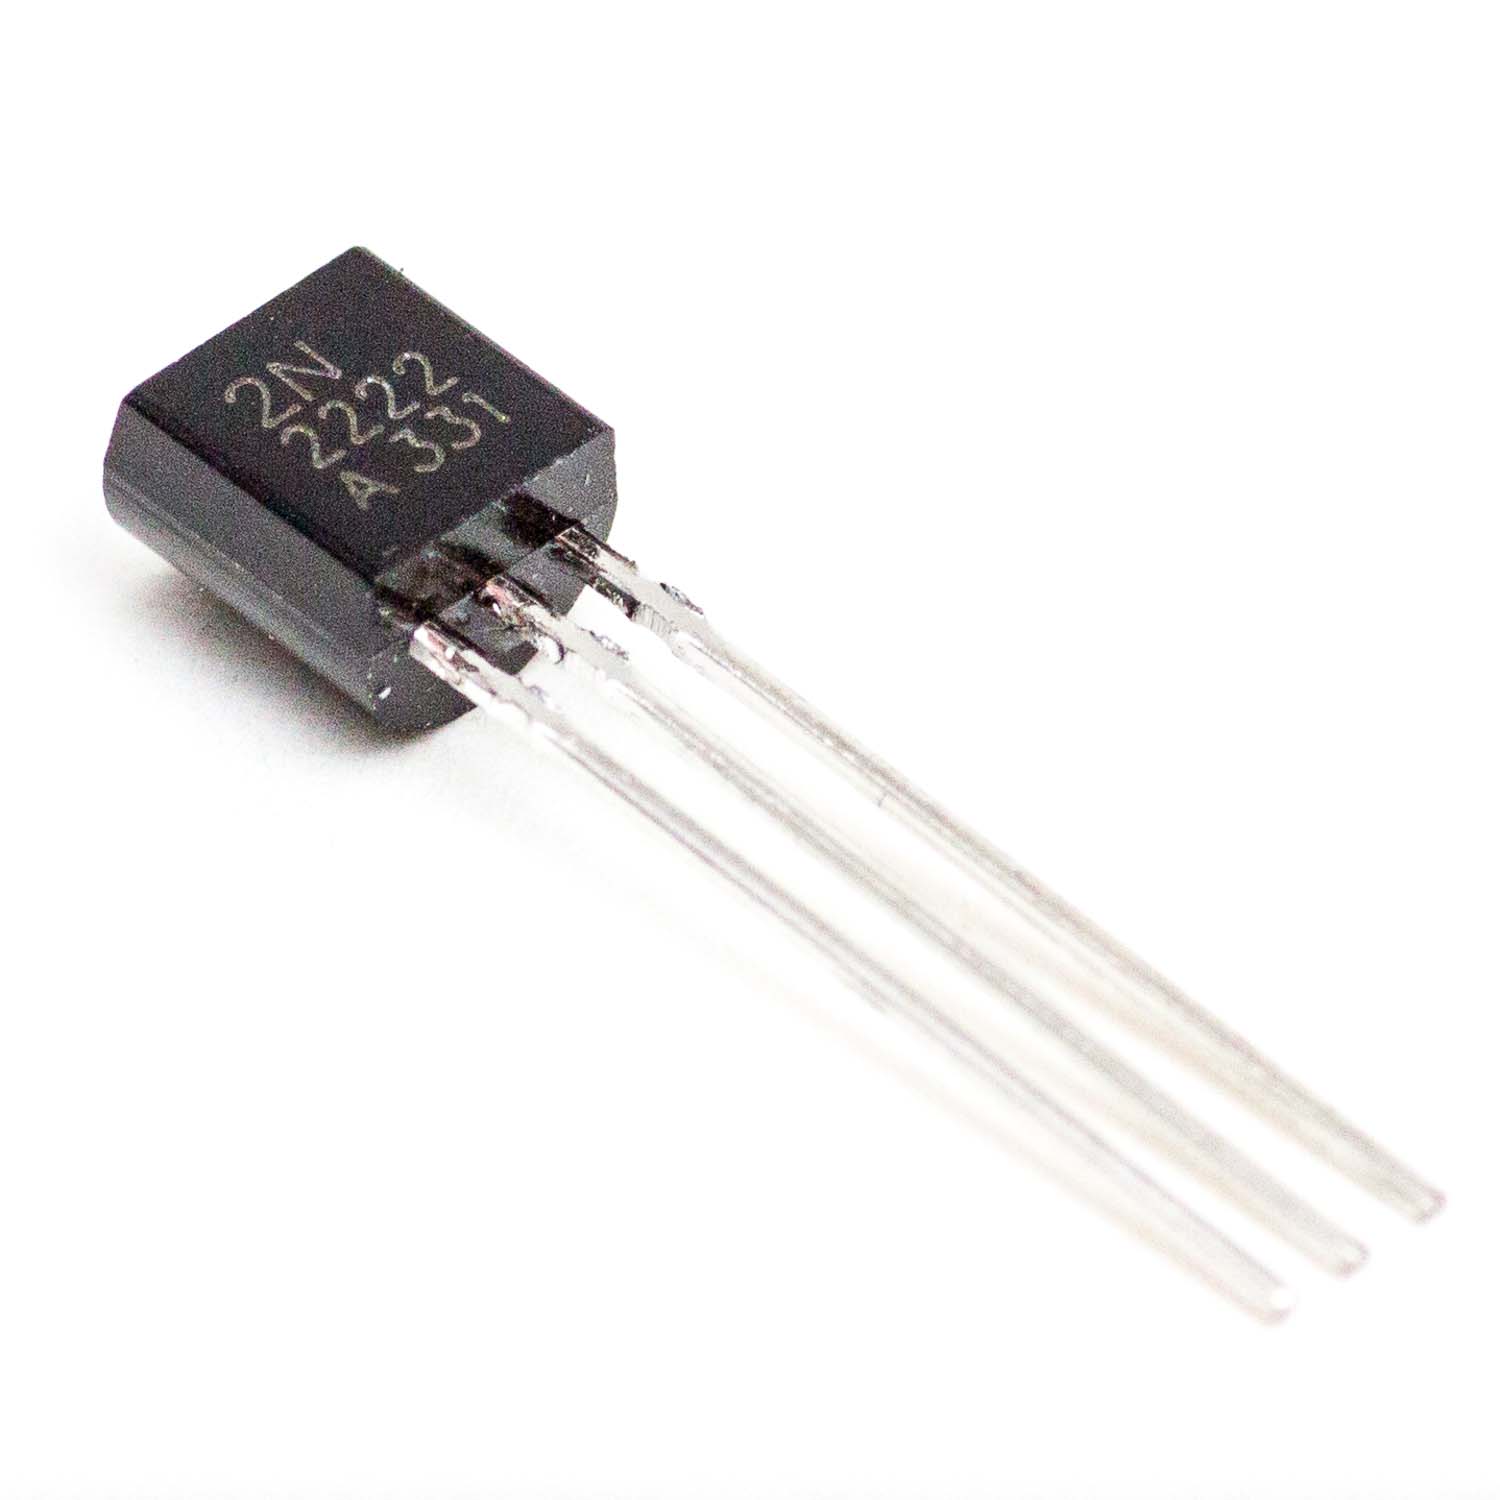 2n2222 transistor applications